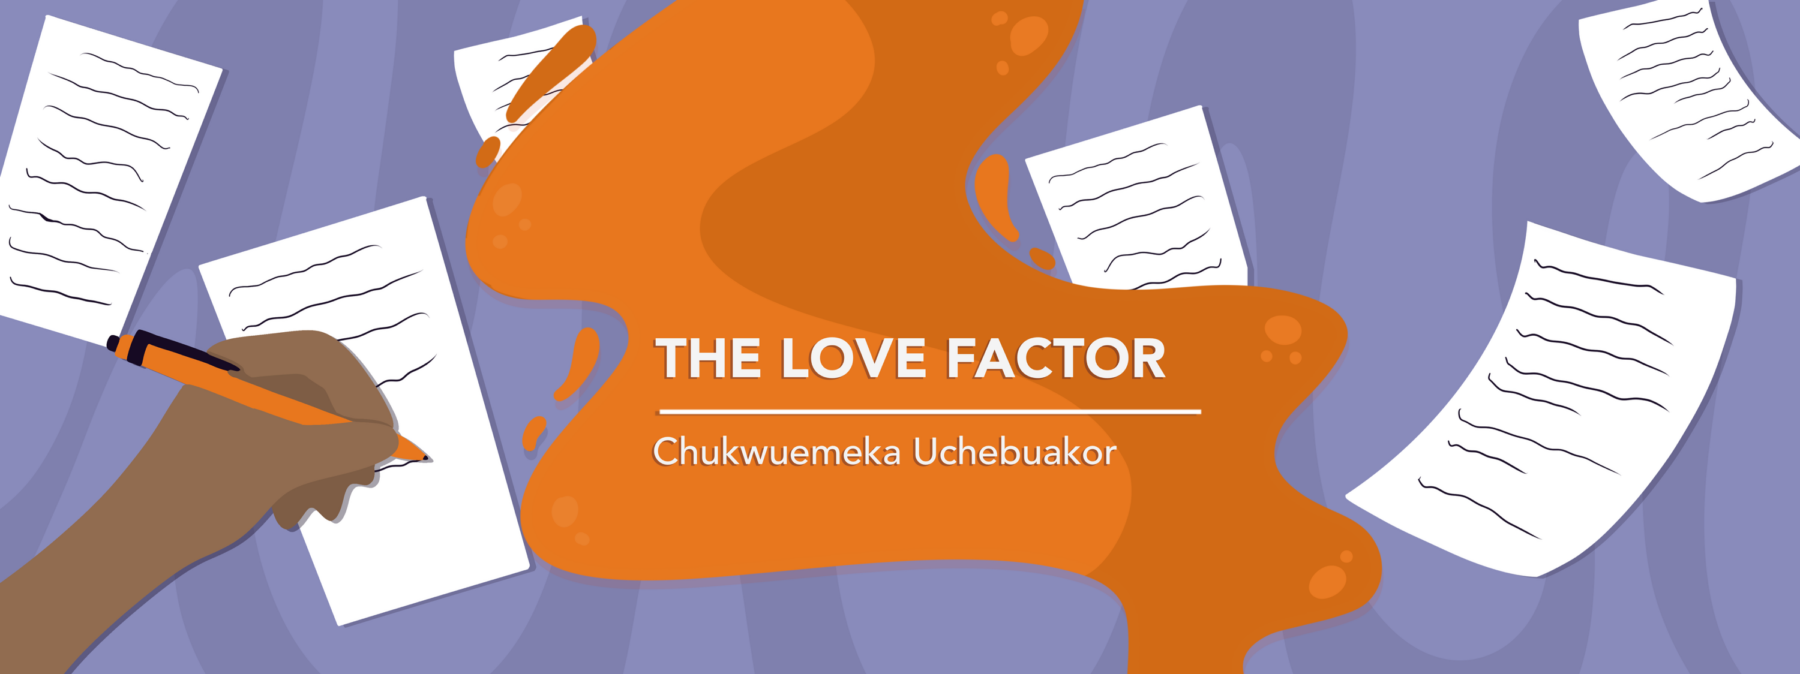 banner image for Chukwuemeka Uchebuakor's Parkinson's column, 